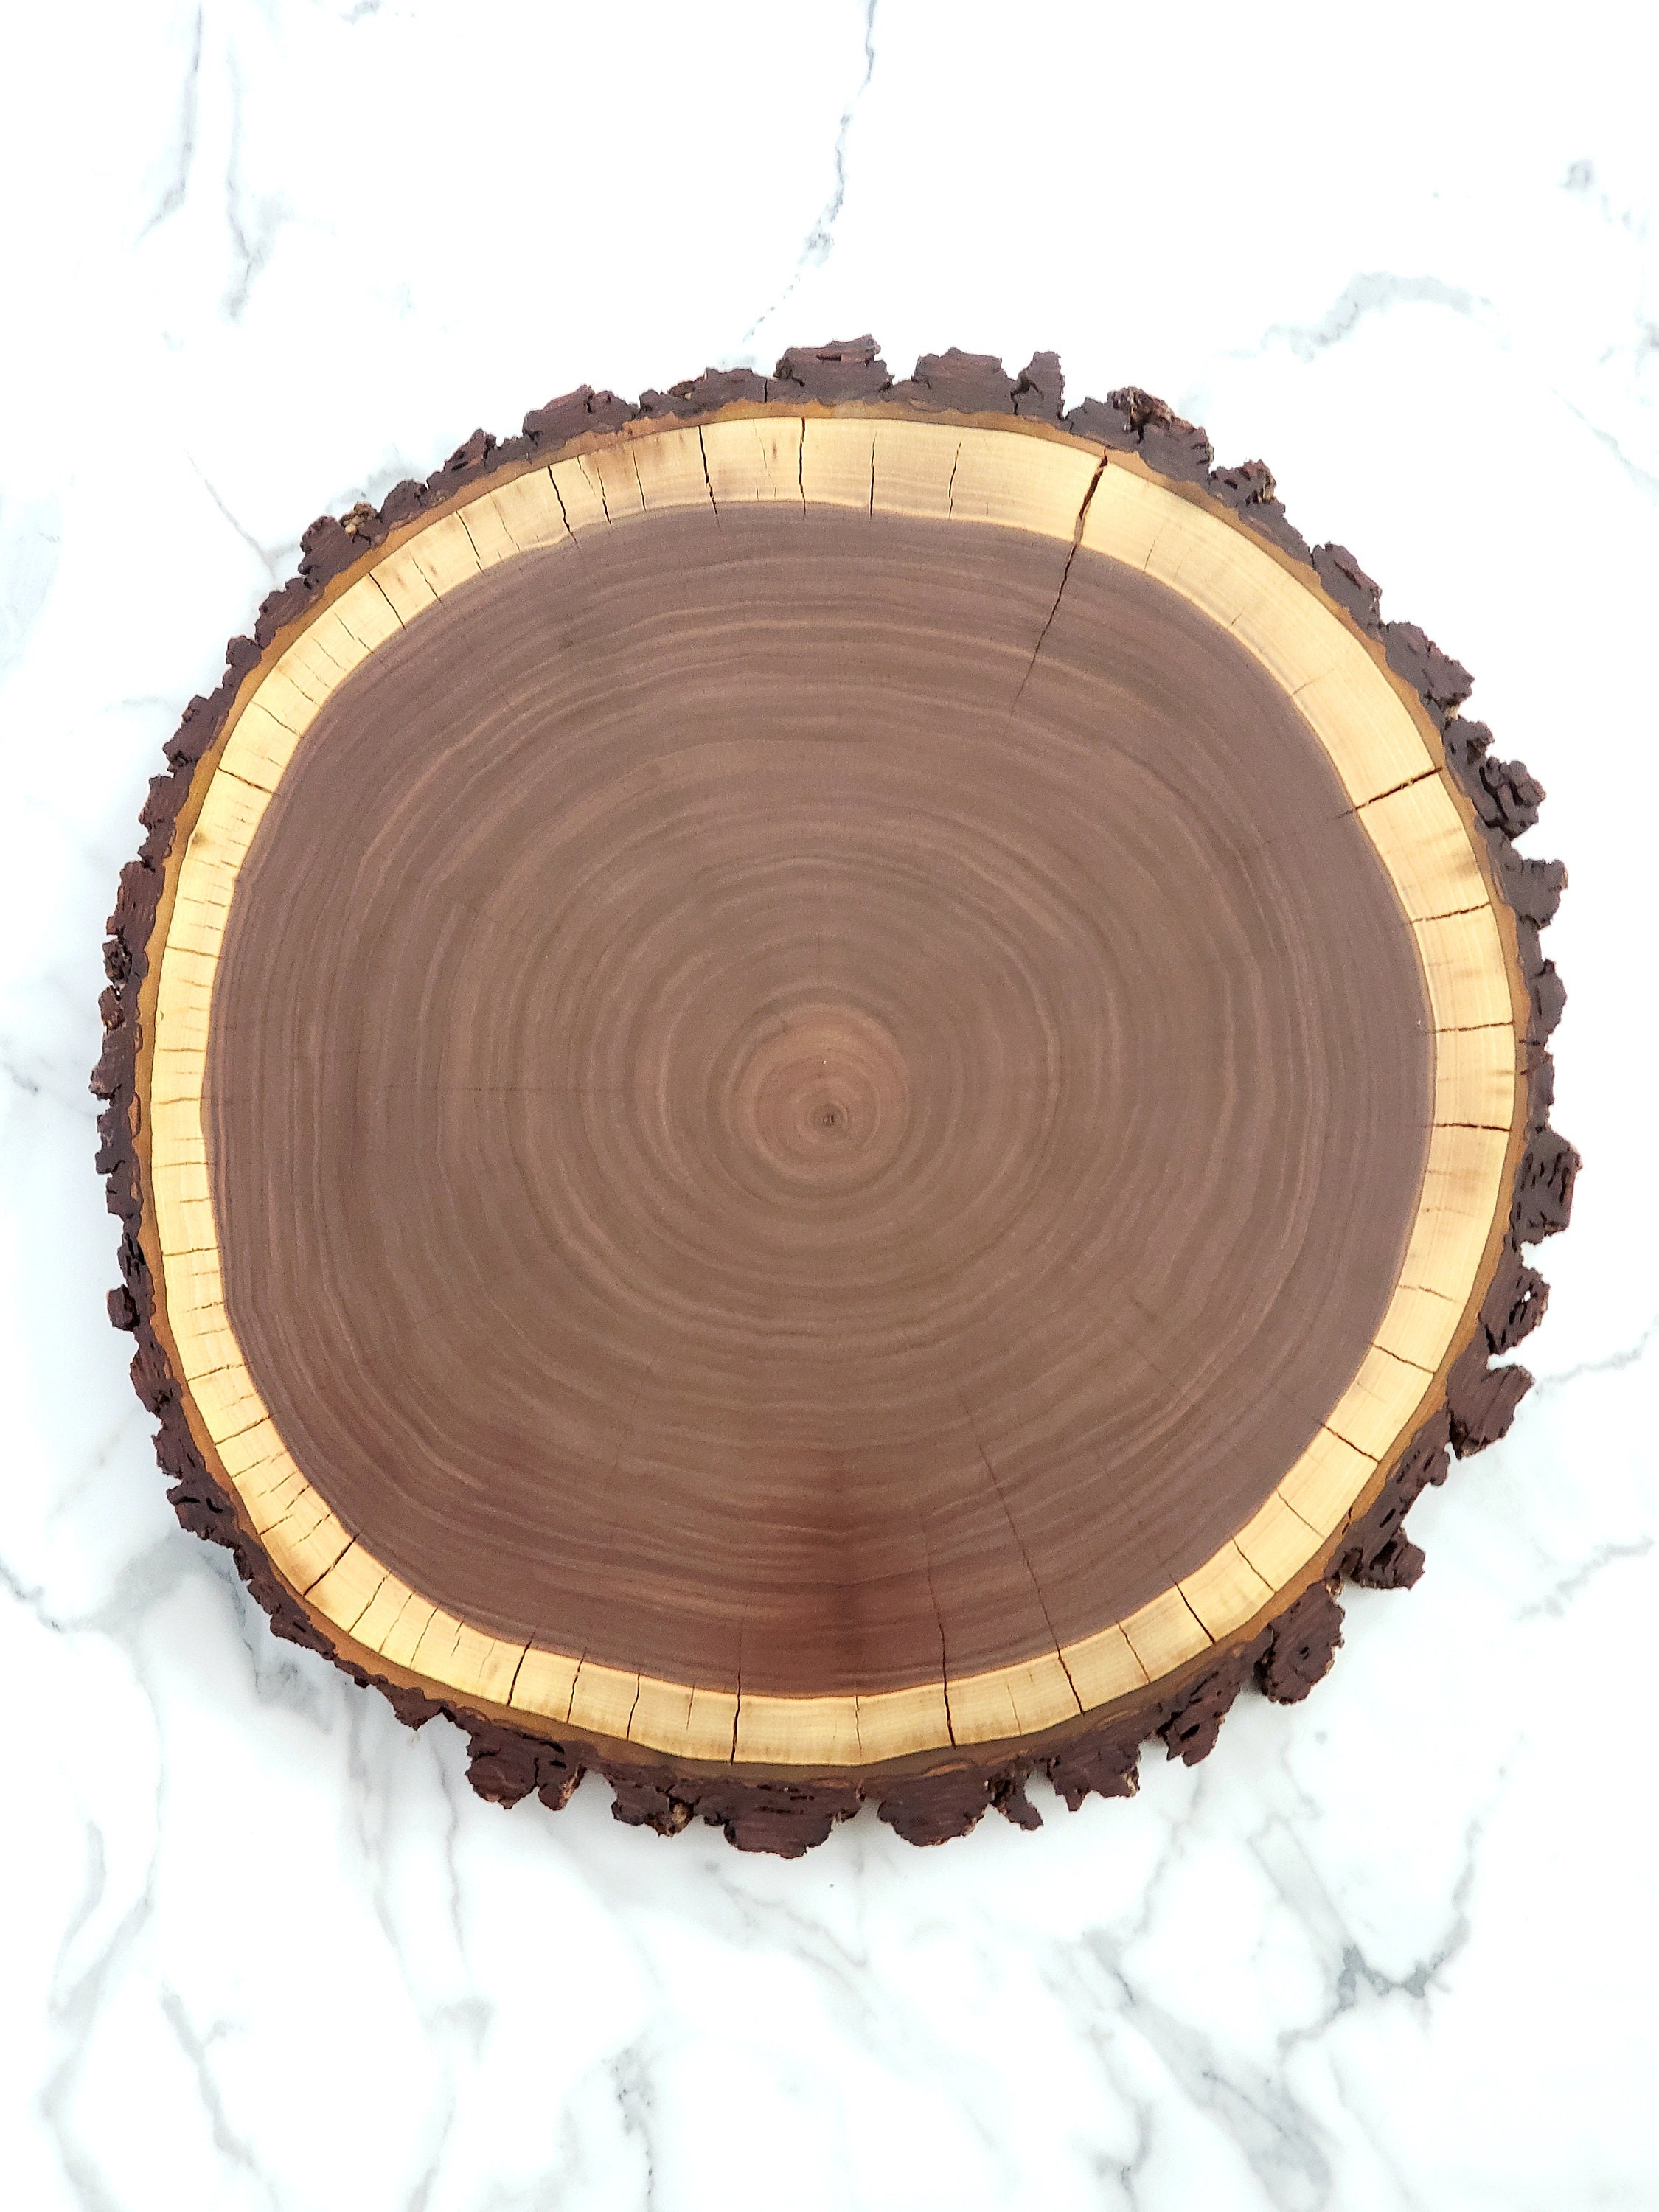 XL Big Wood Log Tree Trunk Slice Disc Slab For Crafts Natural Rustic Decorative 